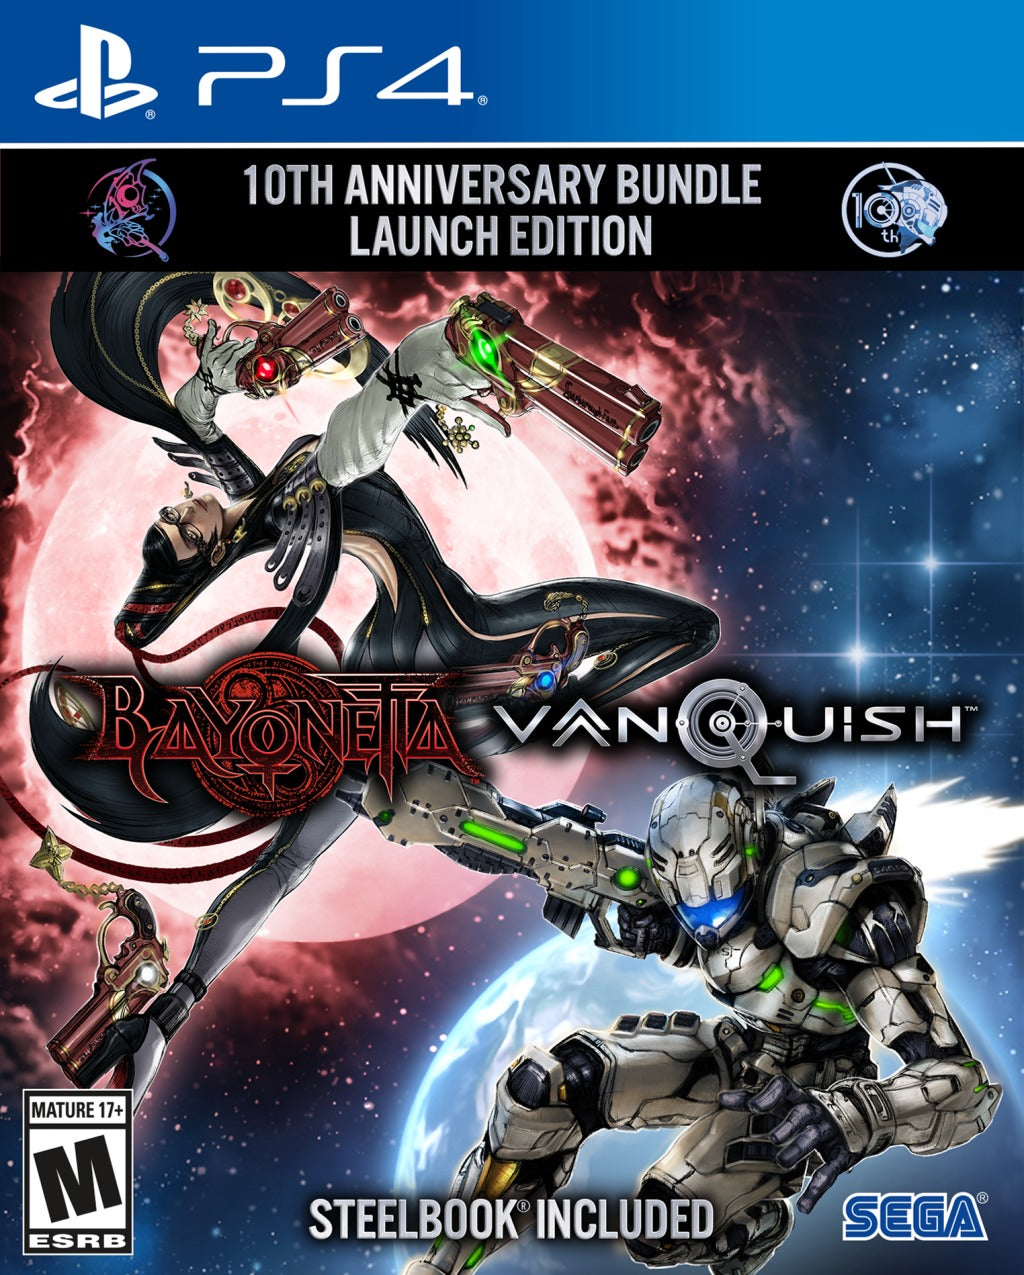 Bayonetta & Vanquish (Steelbook Edition) (Playstation 4)